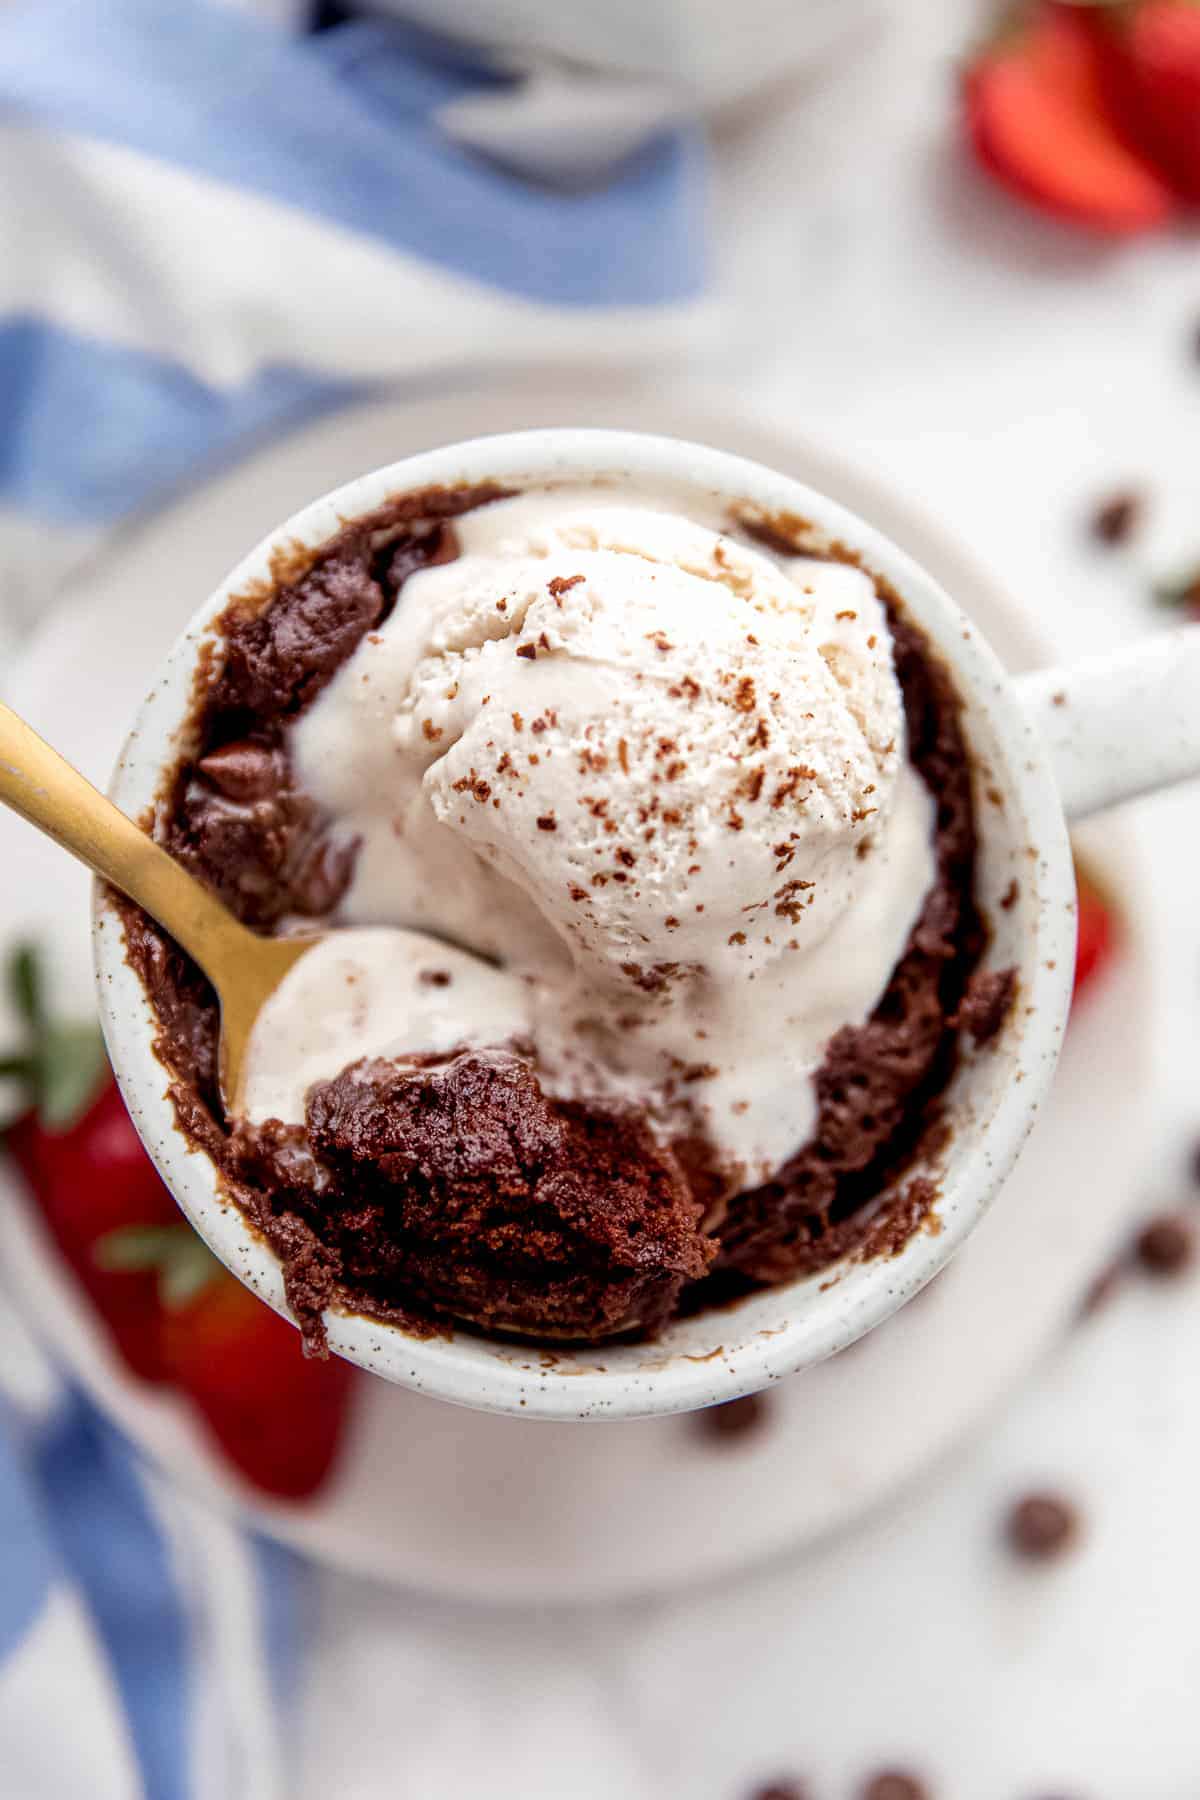 Vanilla ice cream and brownie in a mug.